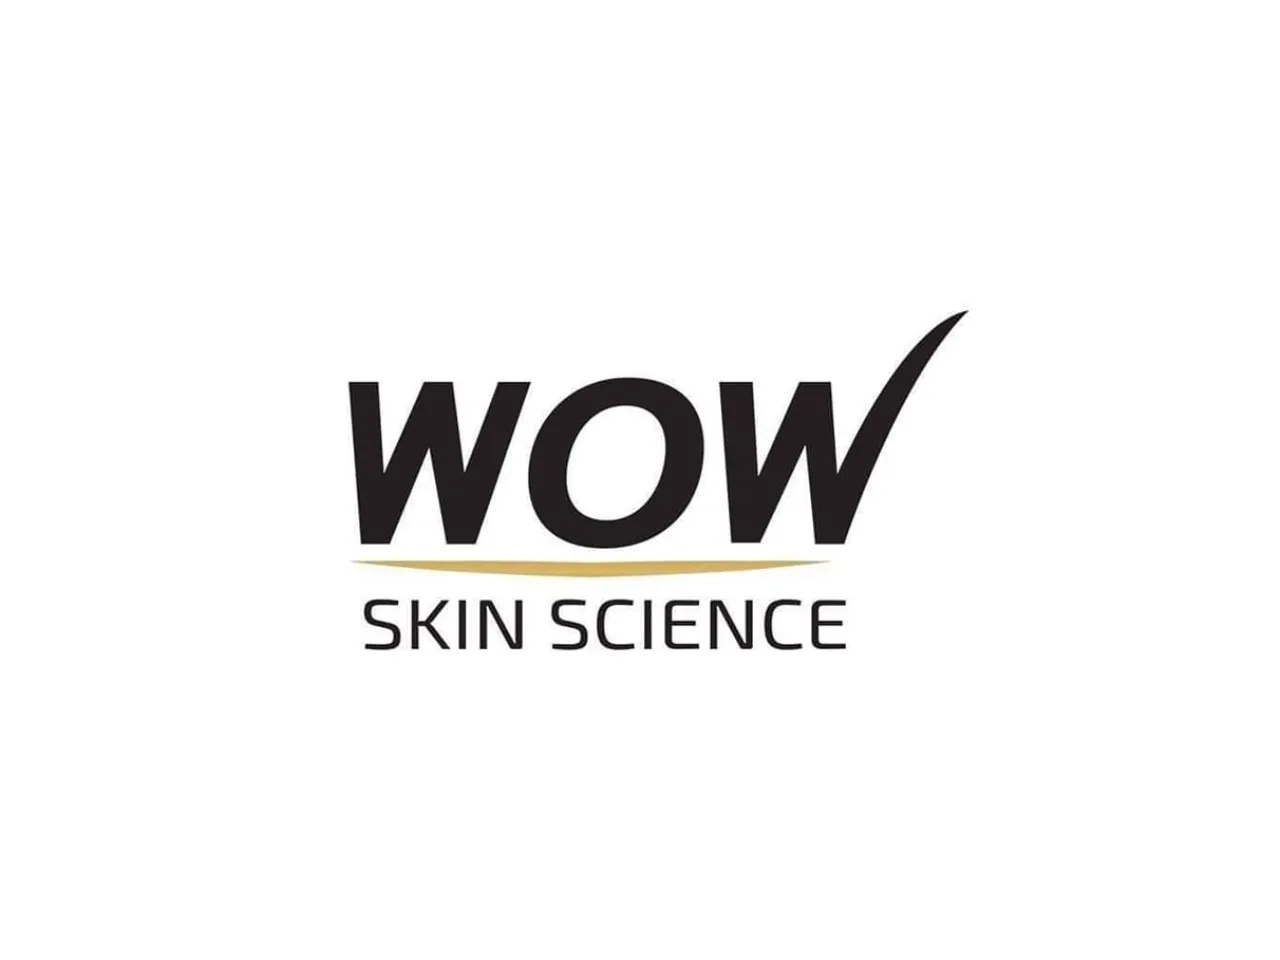 wow skin science